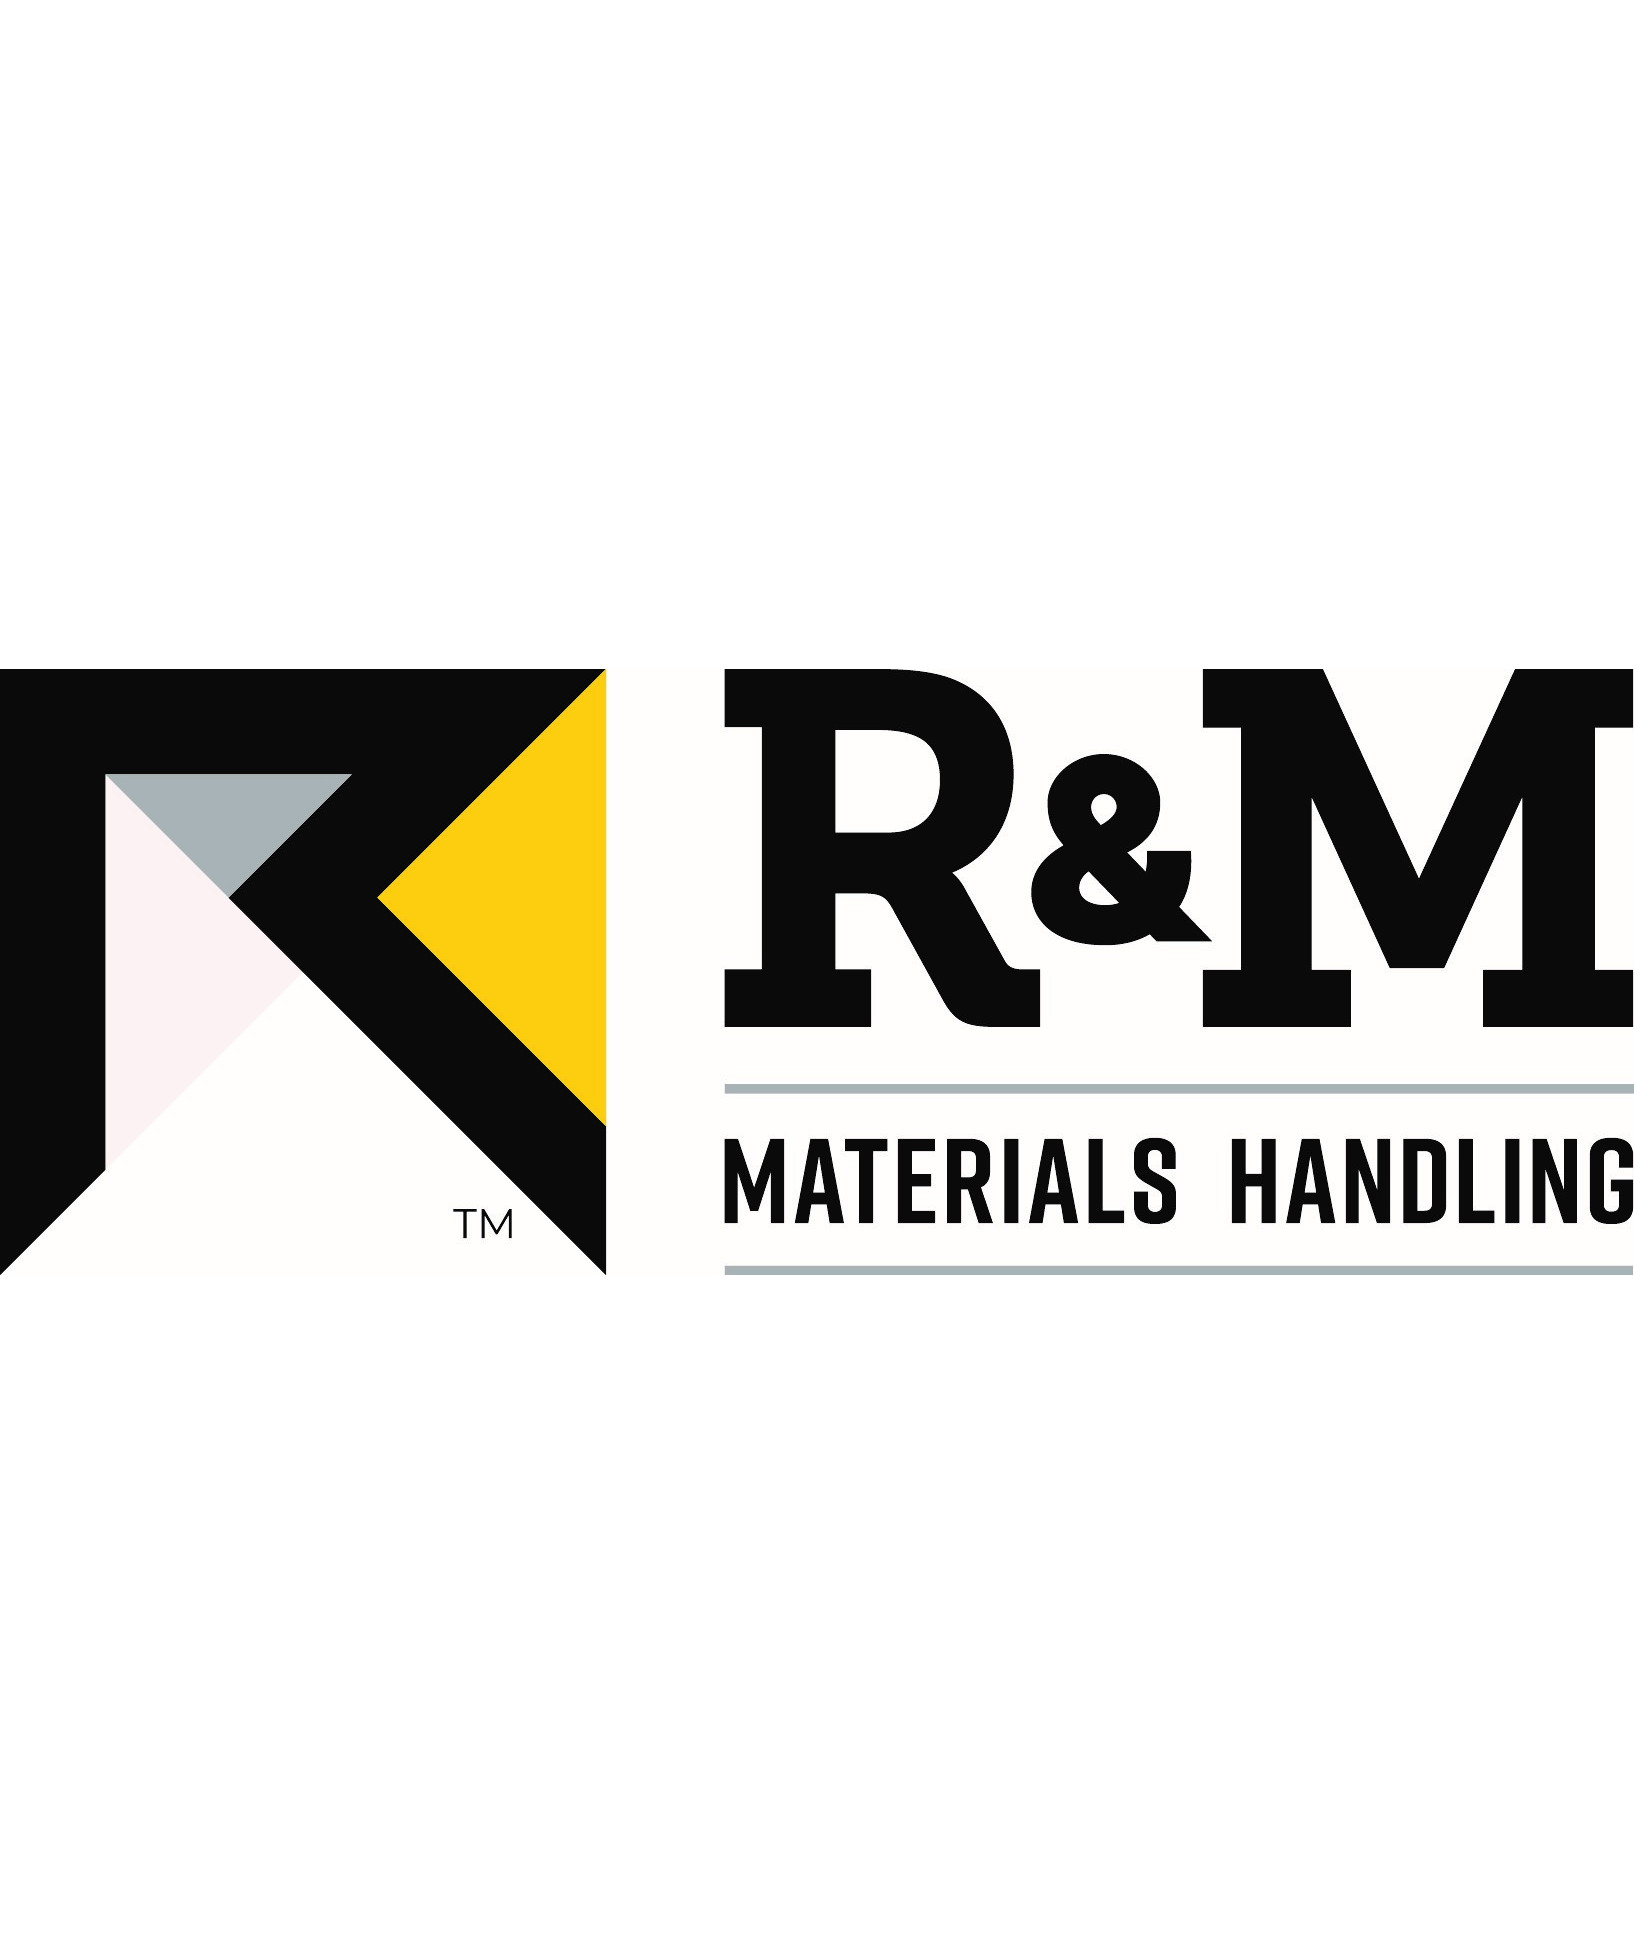 rm_logo